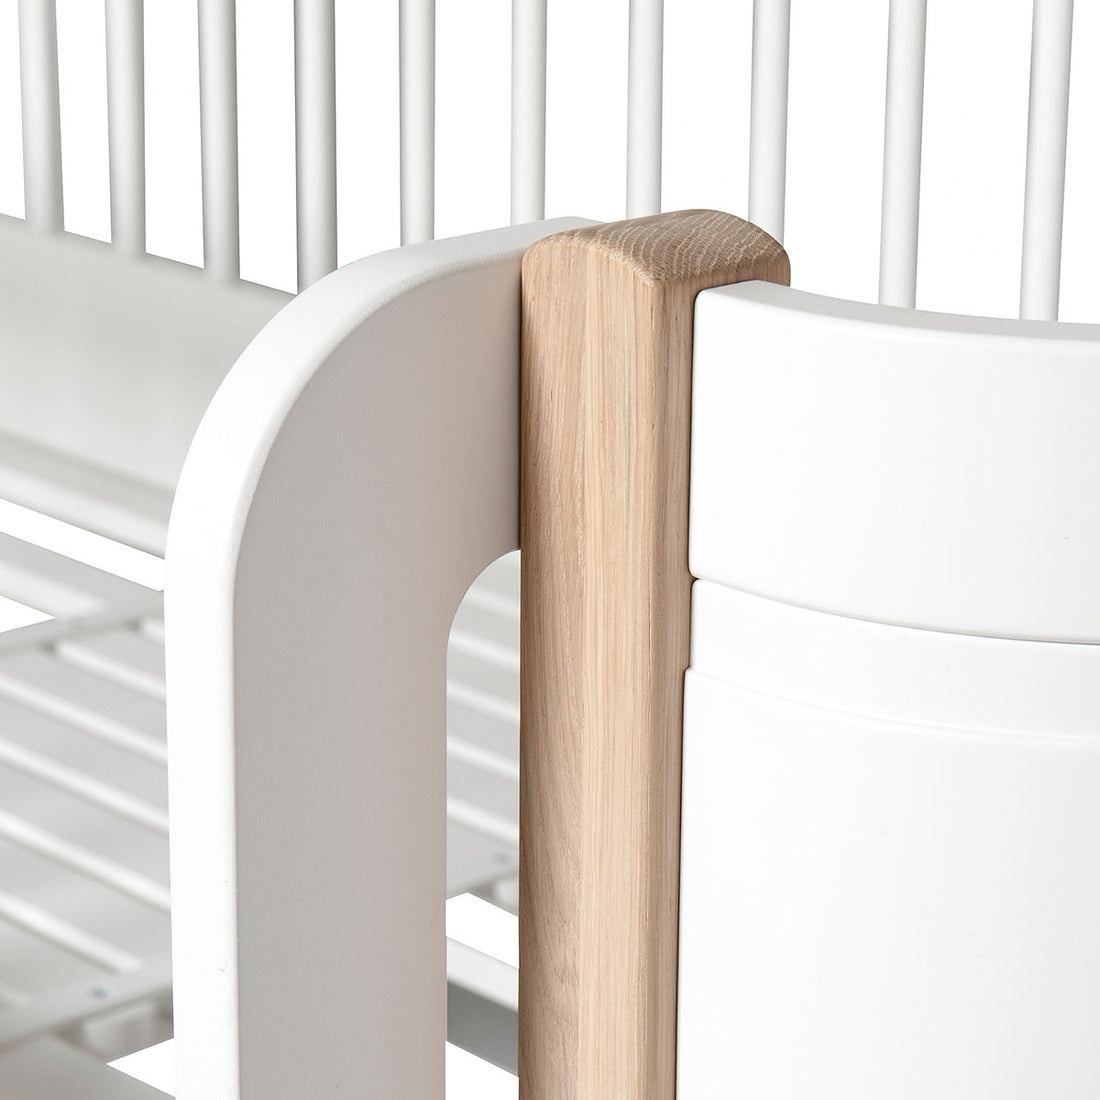 oliver-furniture-wood-mini-with-low-loft-bed-ladder-front-68x162cm-white-oak- (5)